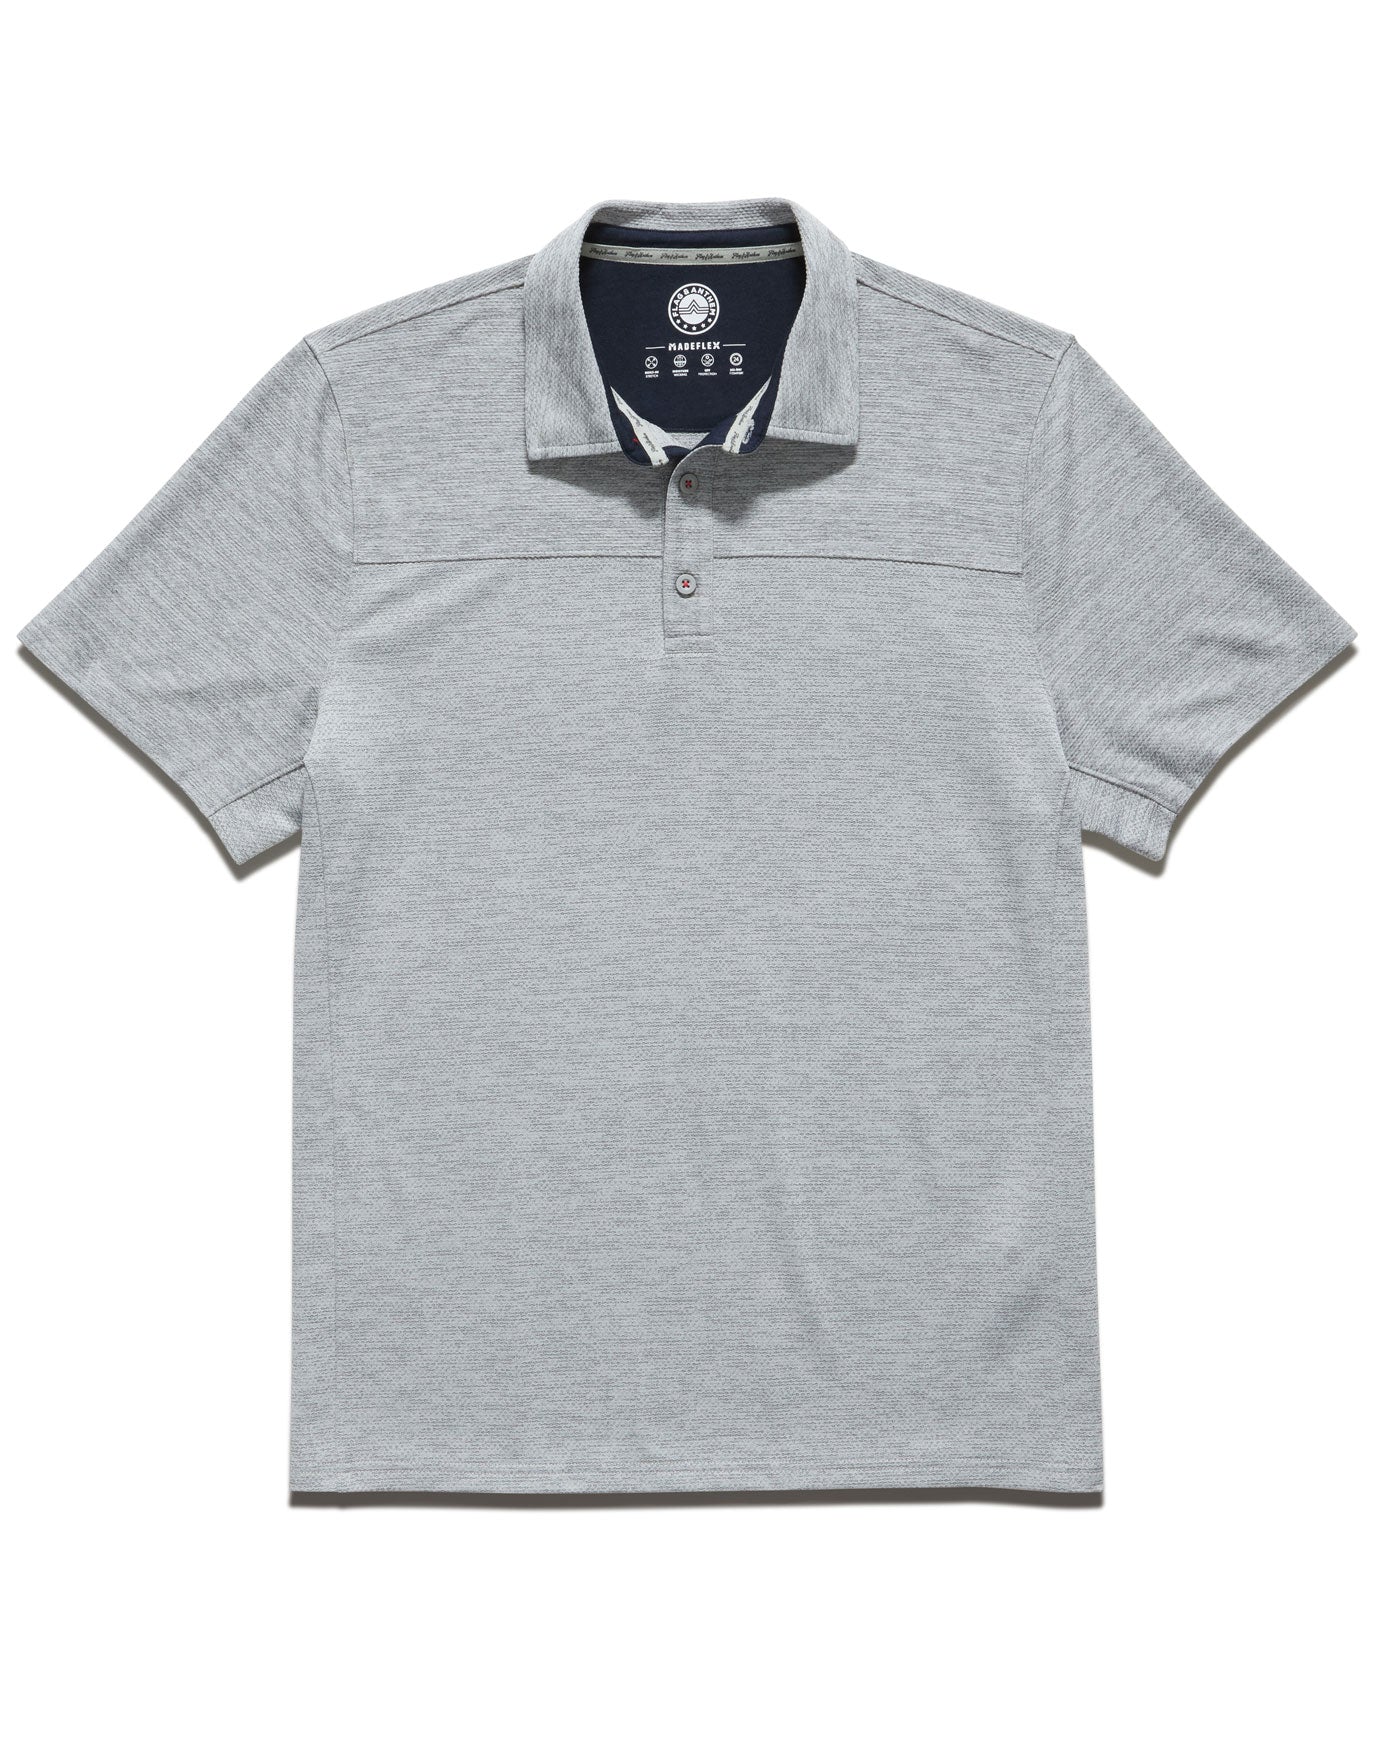 Flag & Anthem Louisville Blocked Polo Shirts in Grey | Men's Regular Size Medium | Polyester | Stitch Fix